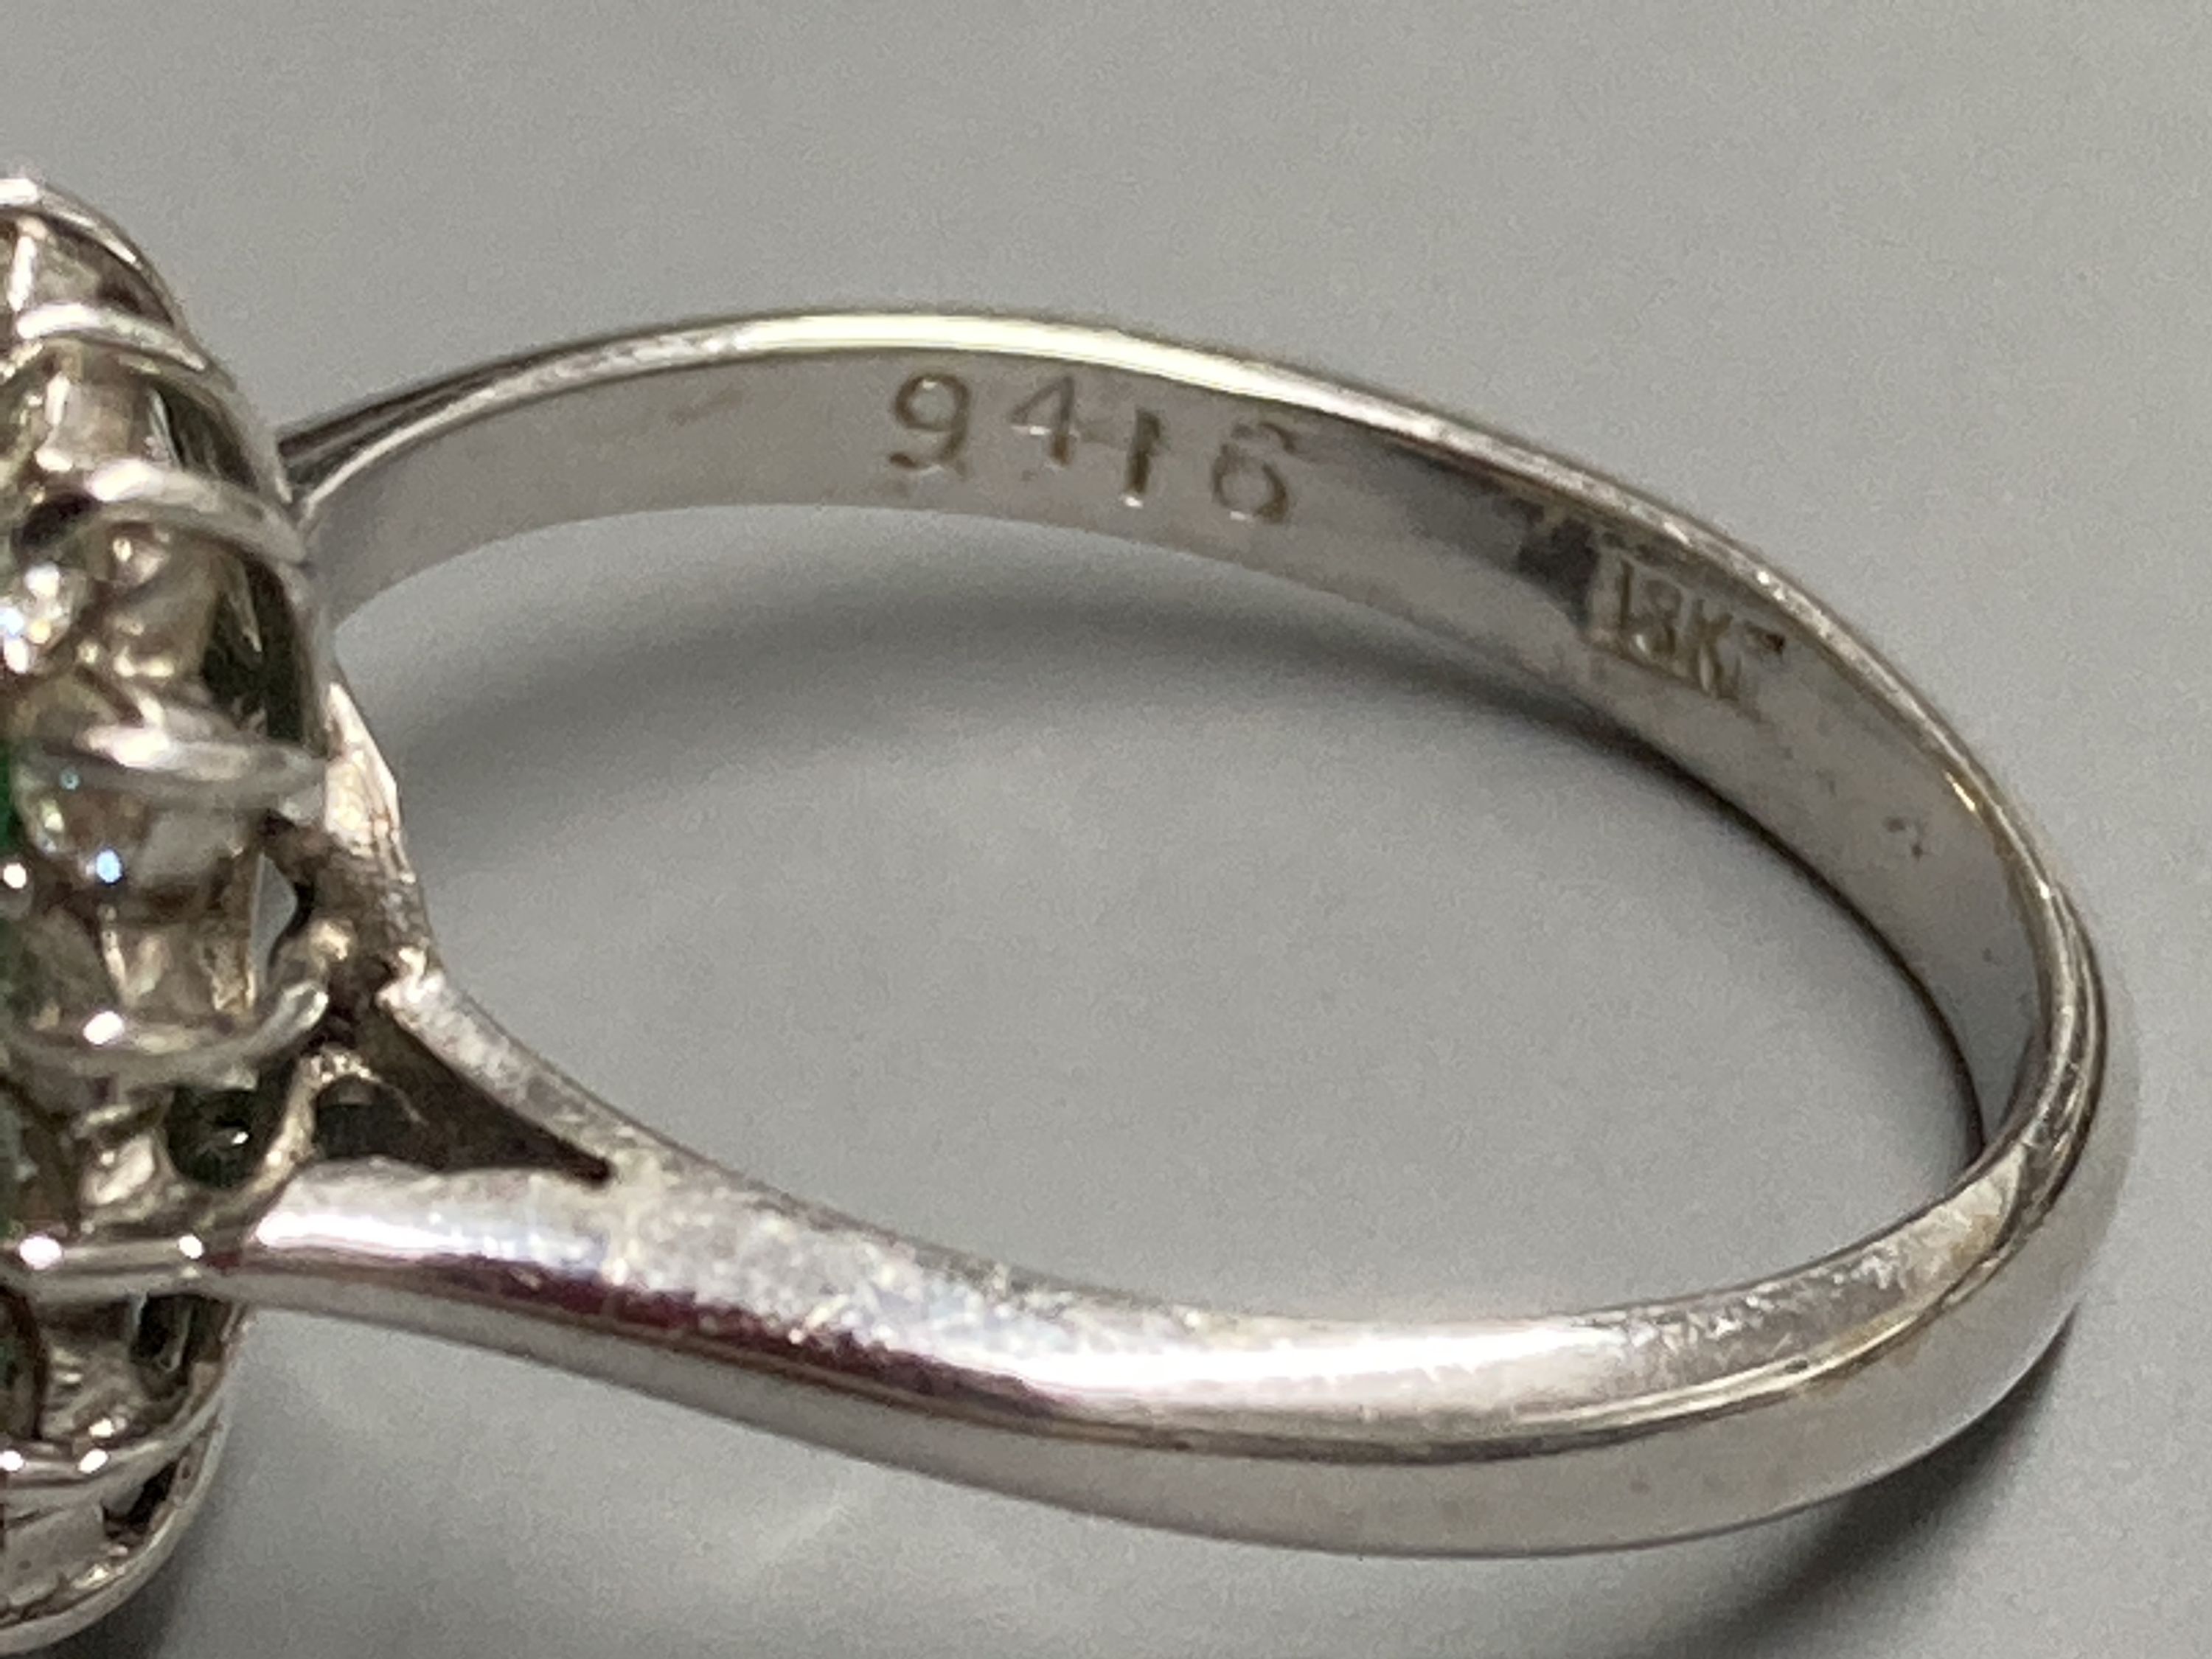 A modern 18ct white gold, emerald and diamond set rectangular cluster ring, size K, gross 3.4 grams.